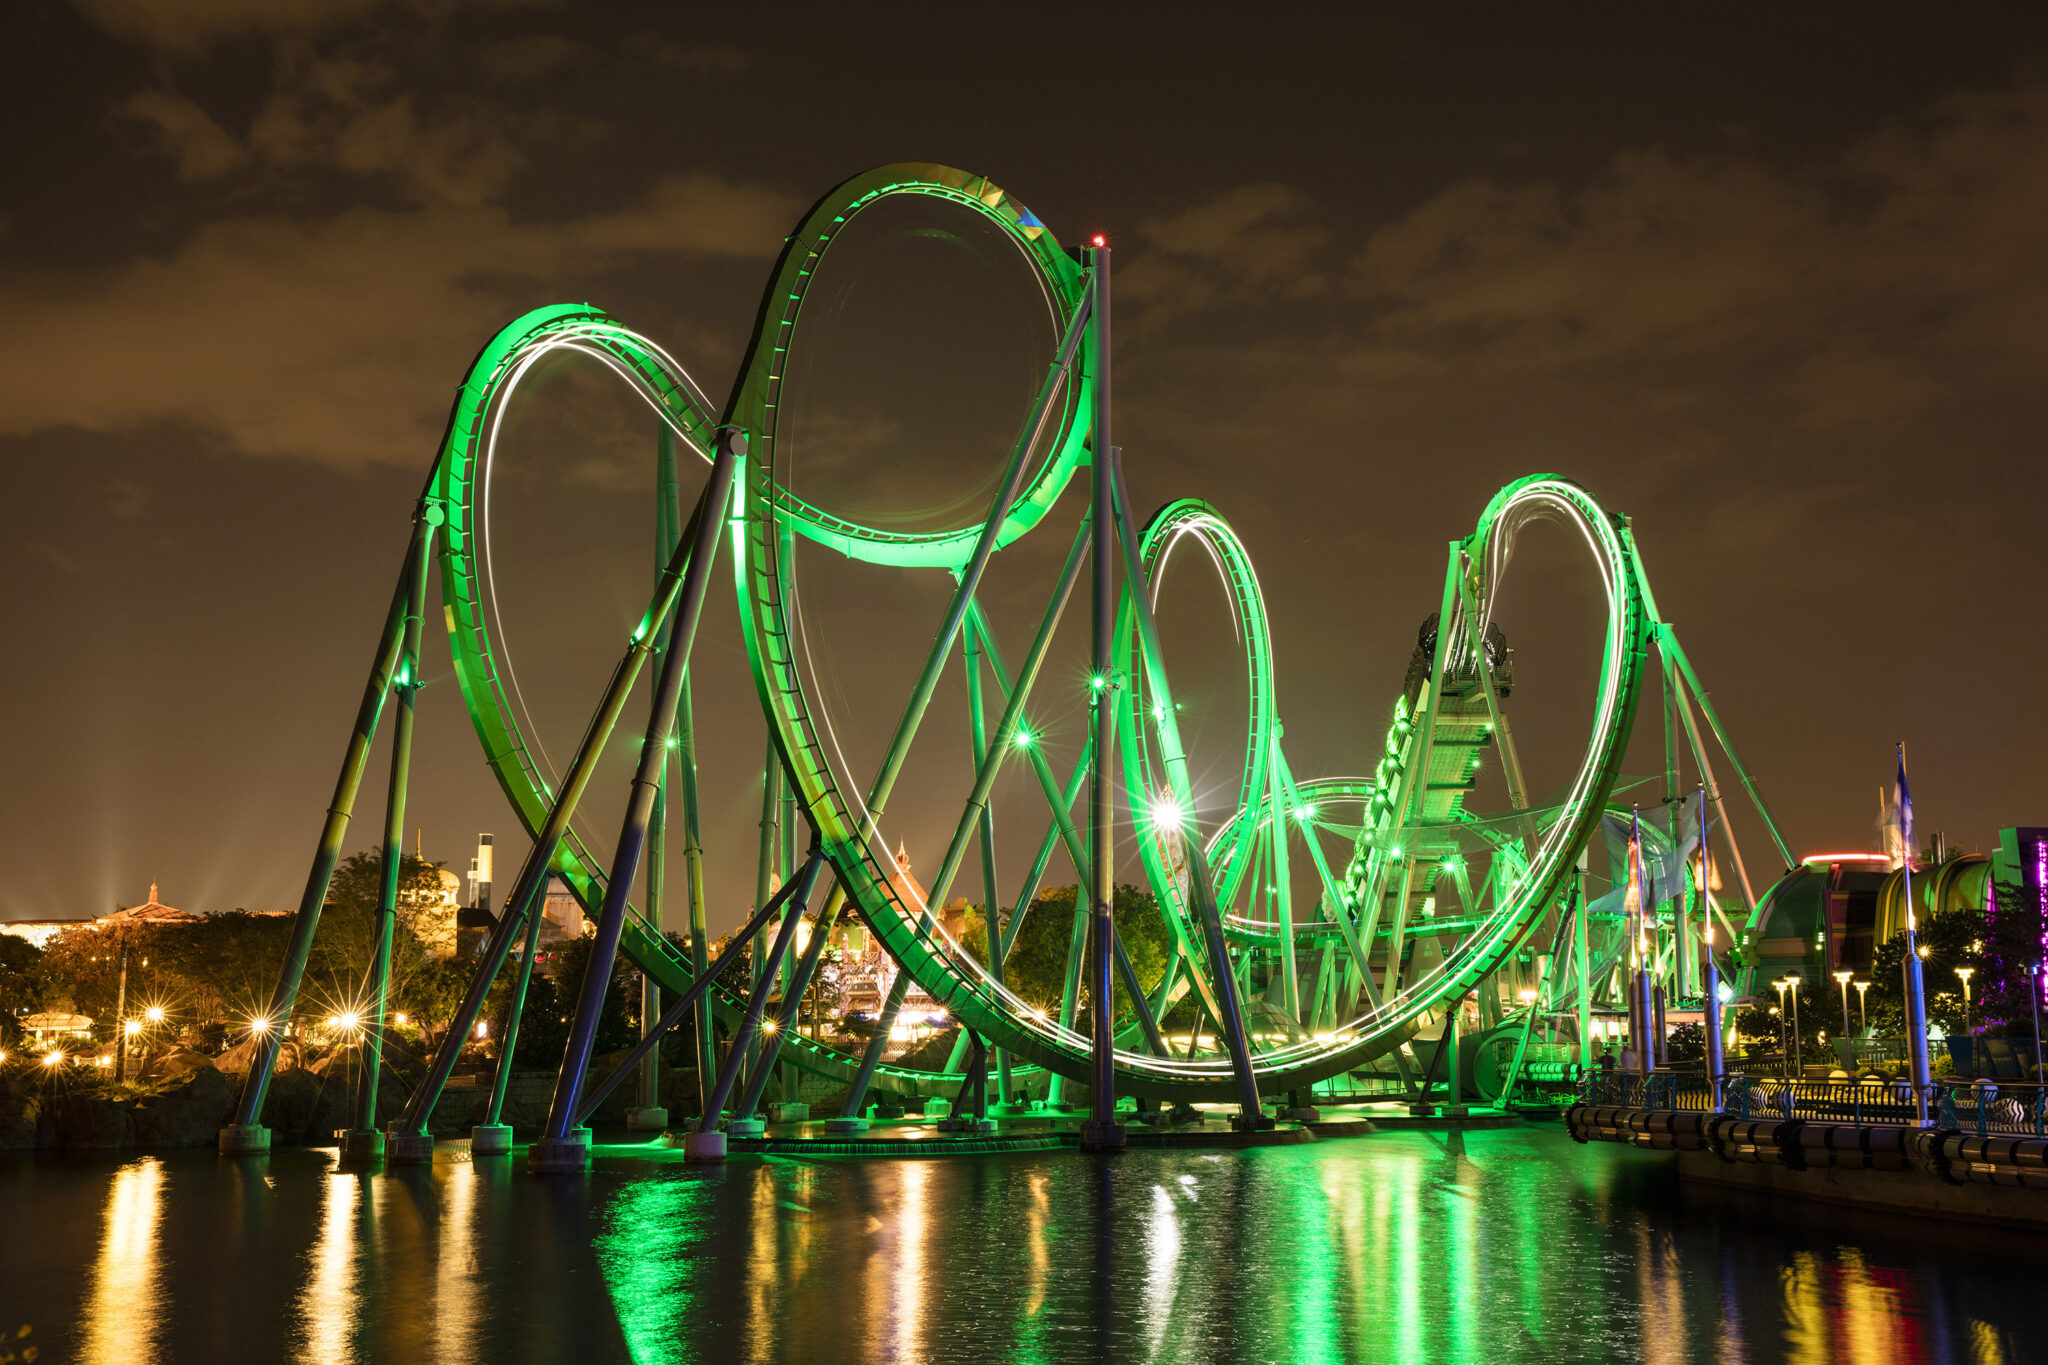 Incredible Hulk Coaster - Universal Orlando Resort